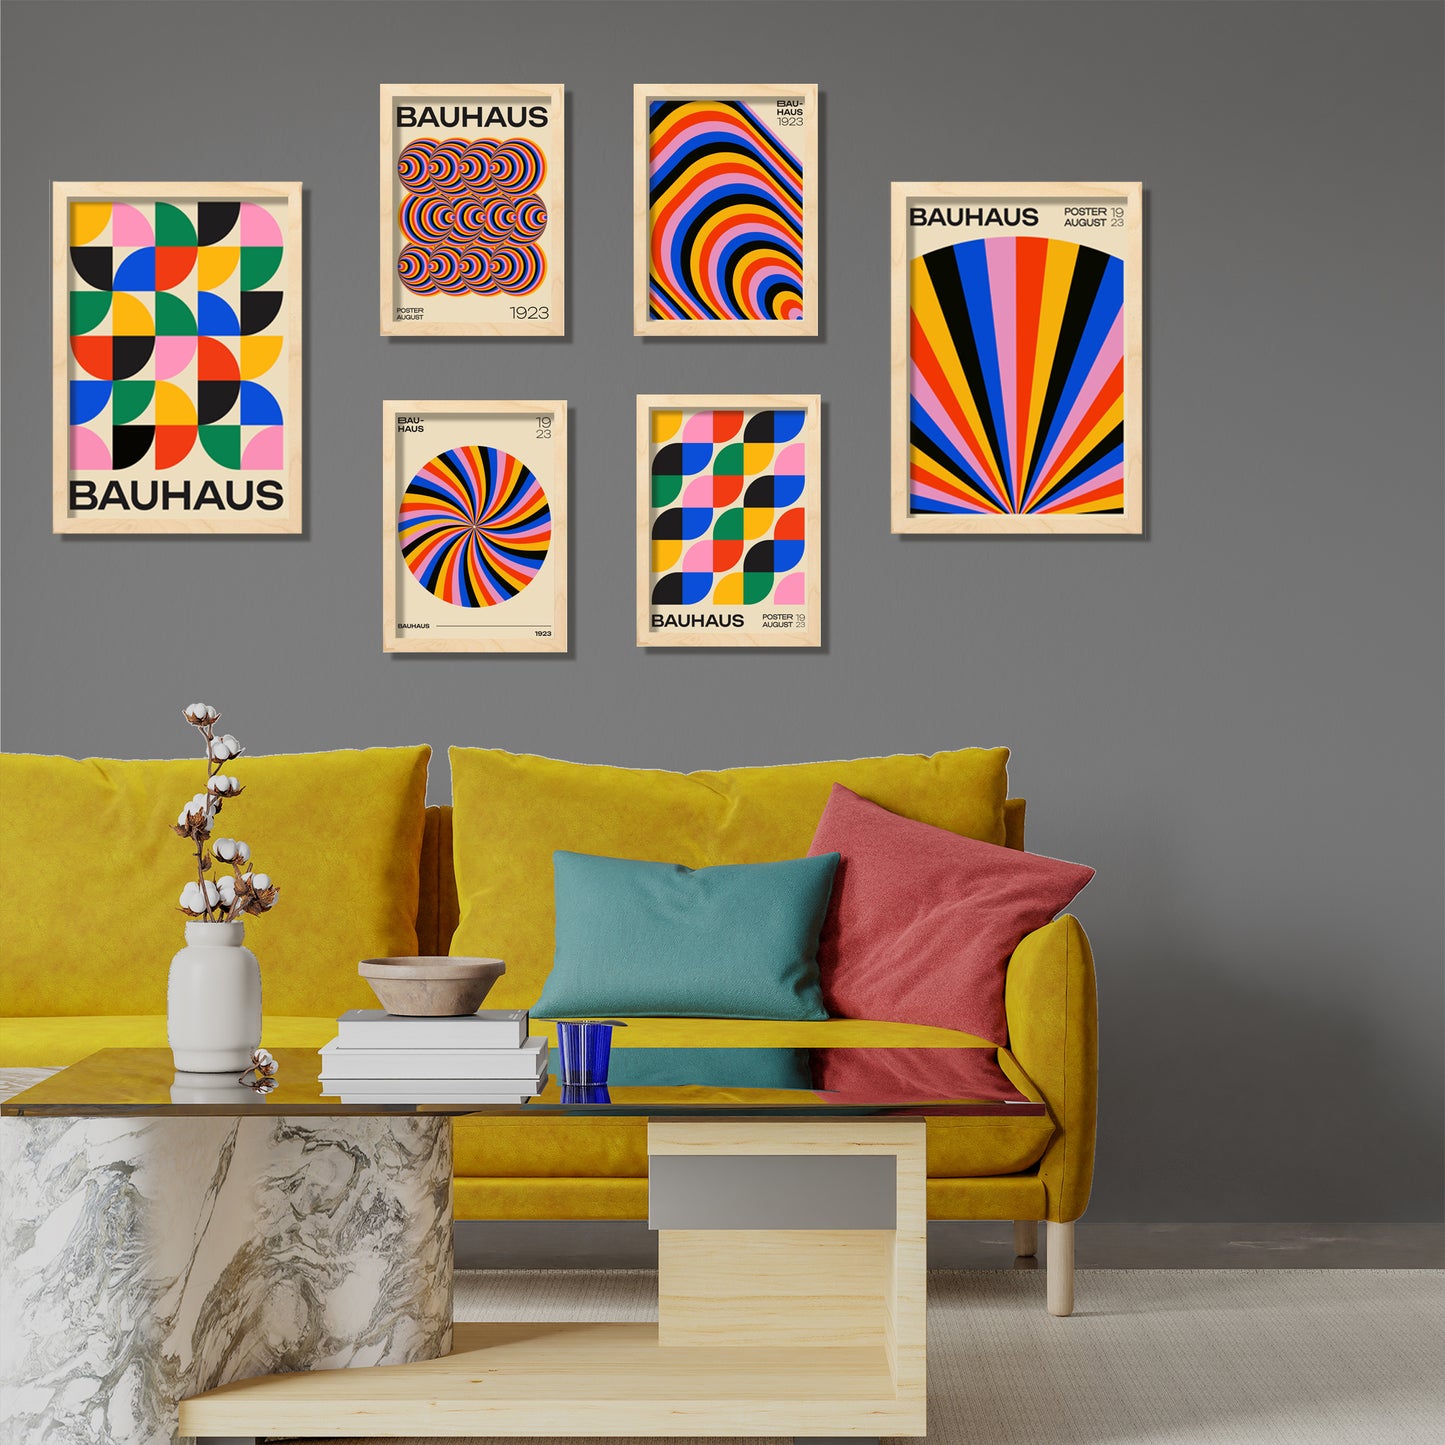 Geometrico Bauhaus colores y formas vibrantes